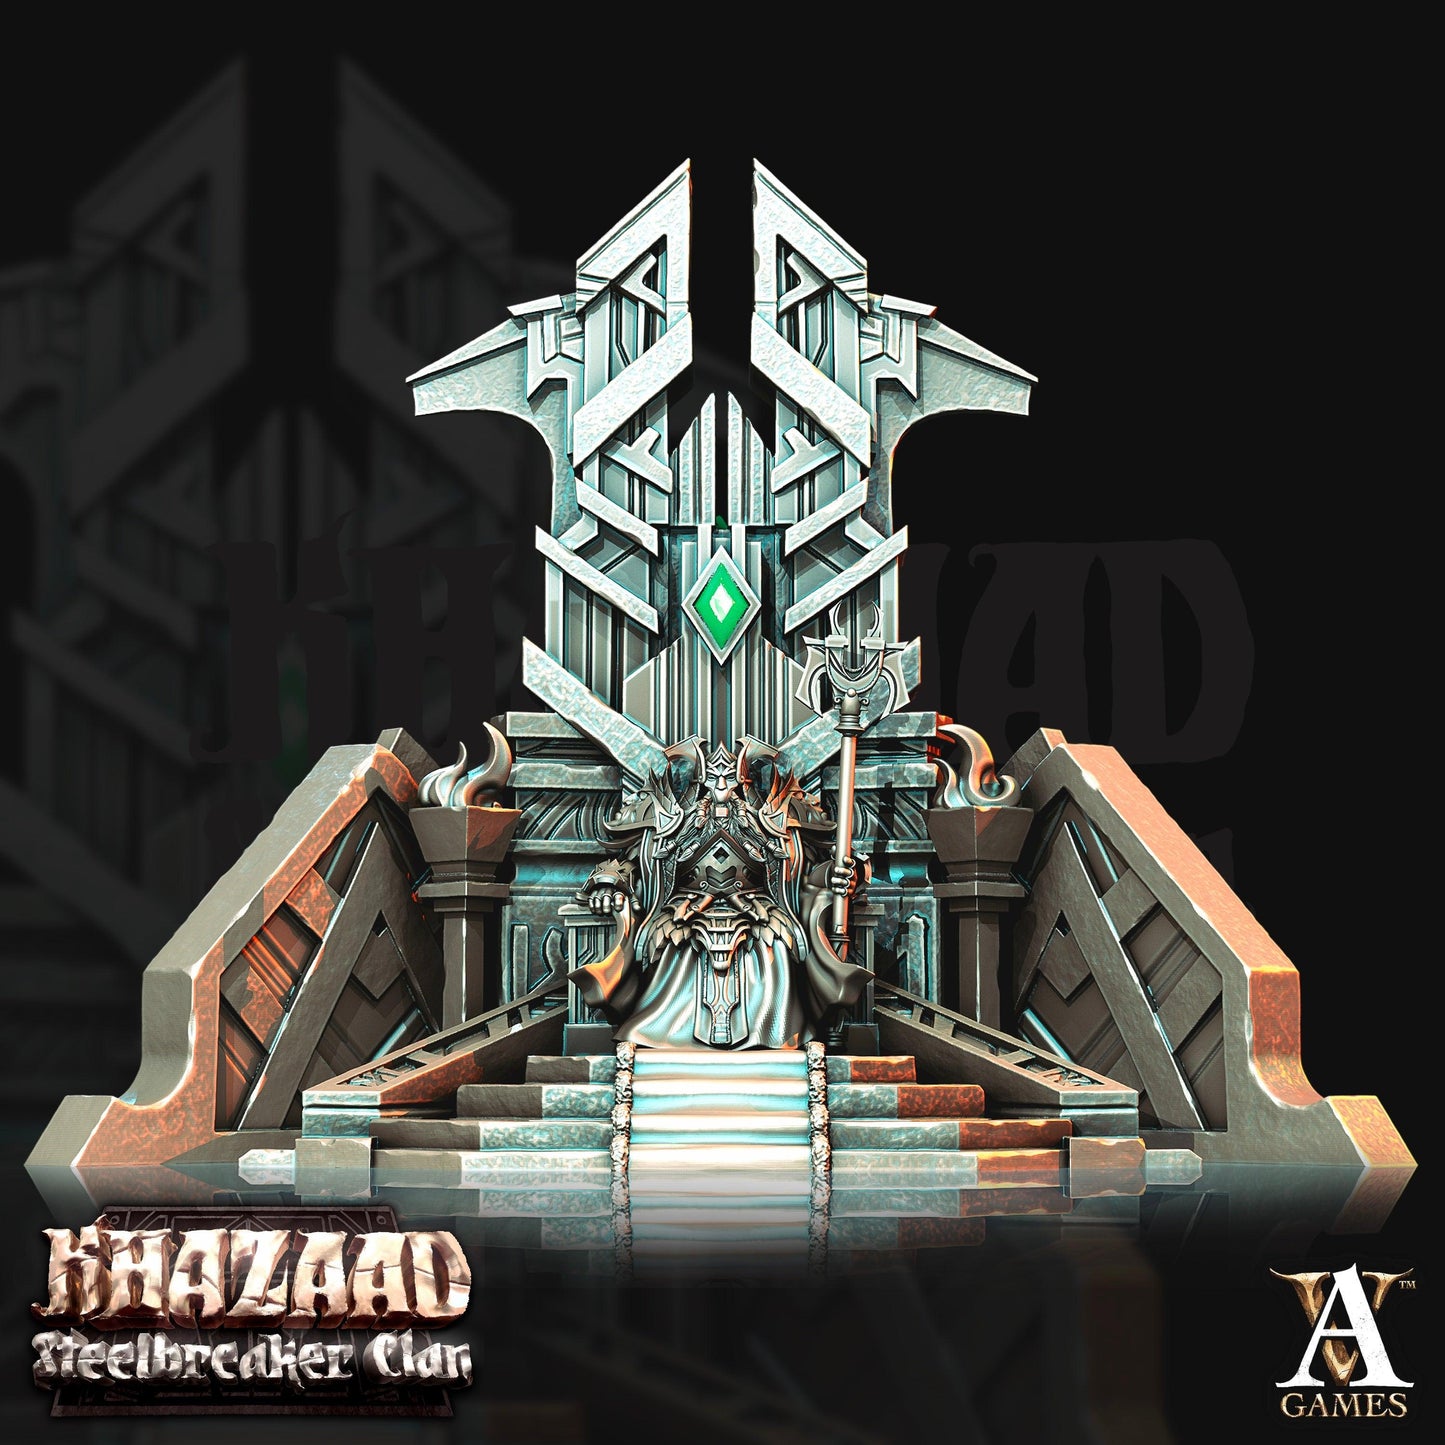 King Thrag Steelhammer - Khazaad Stealbreaker Clan - TODO ROL SPAIN 